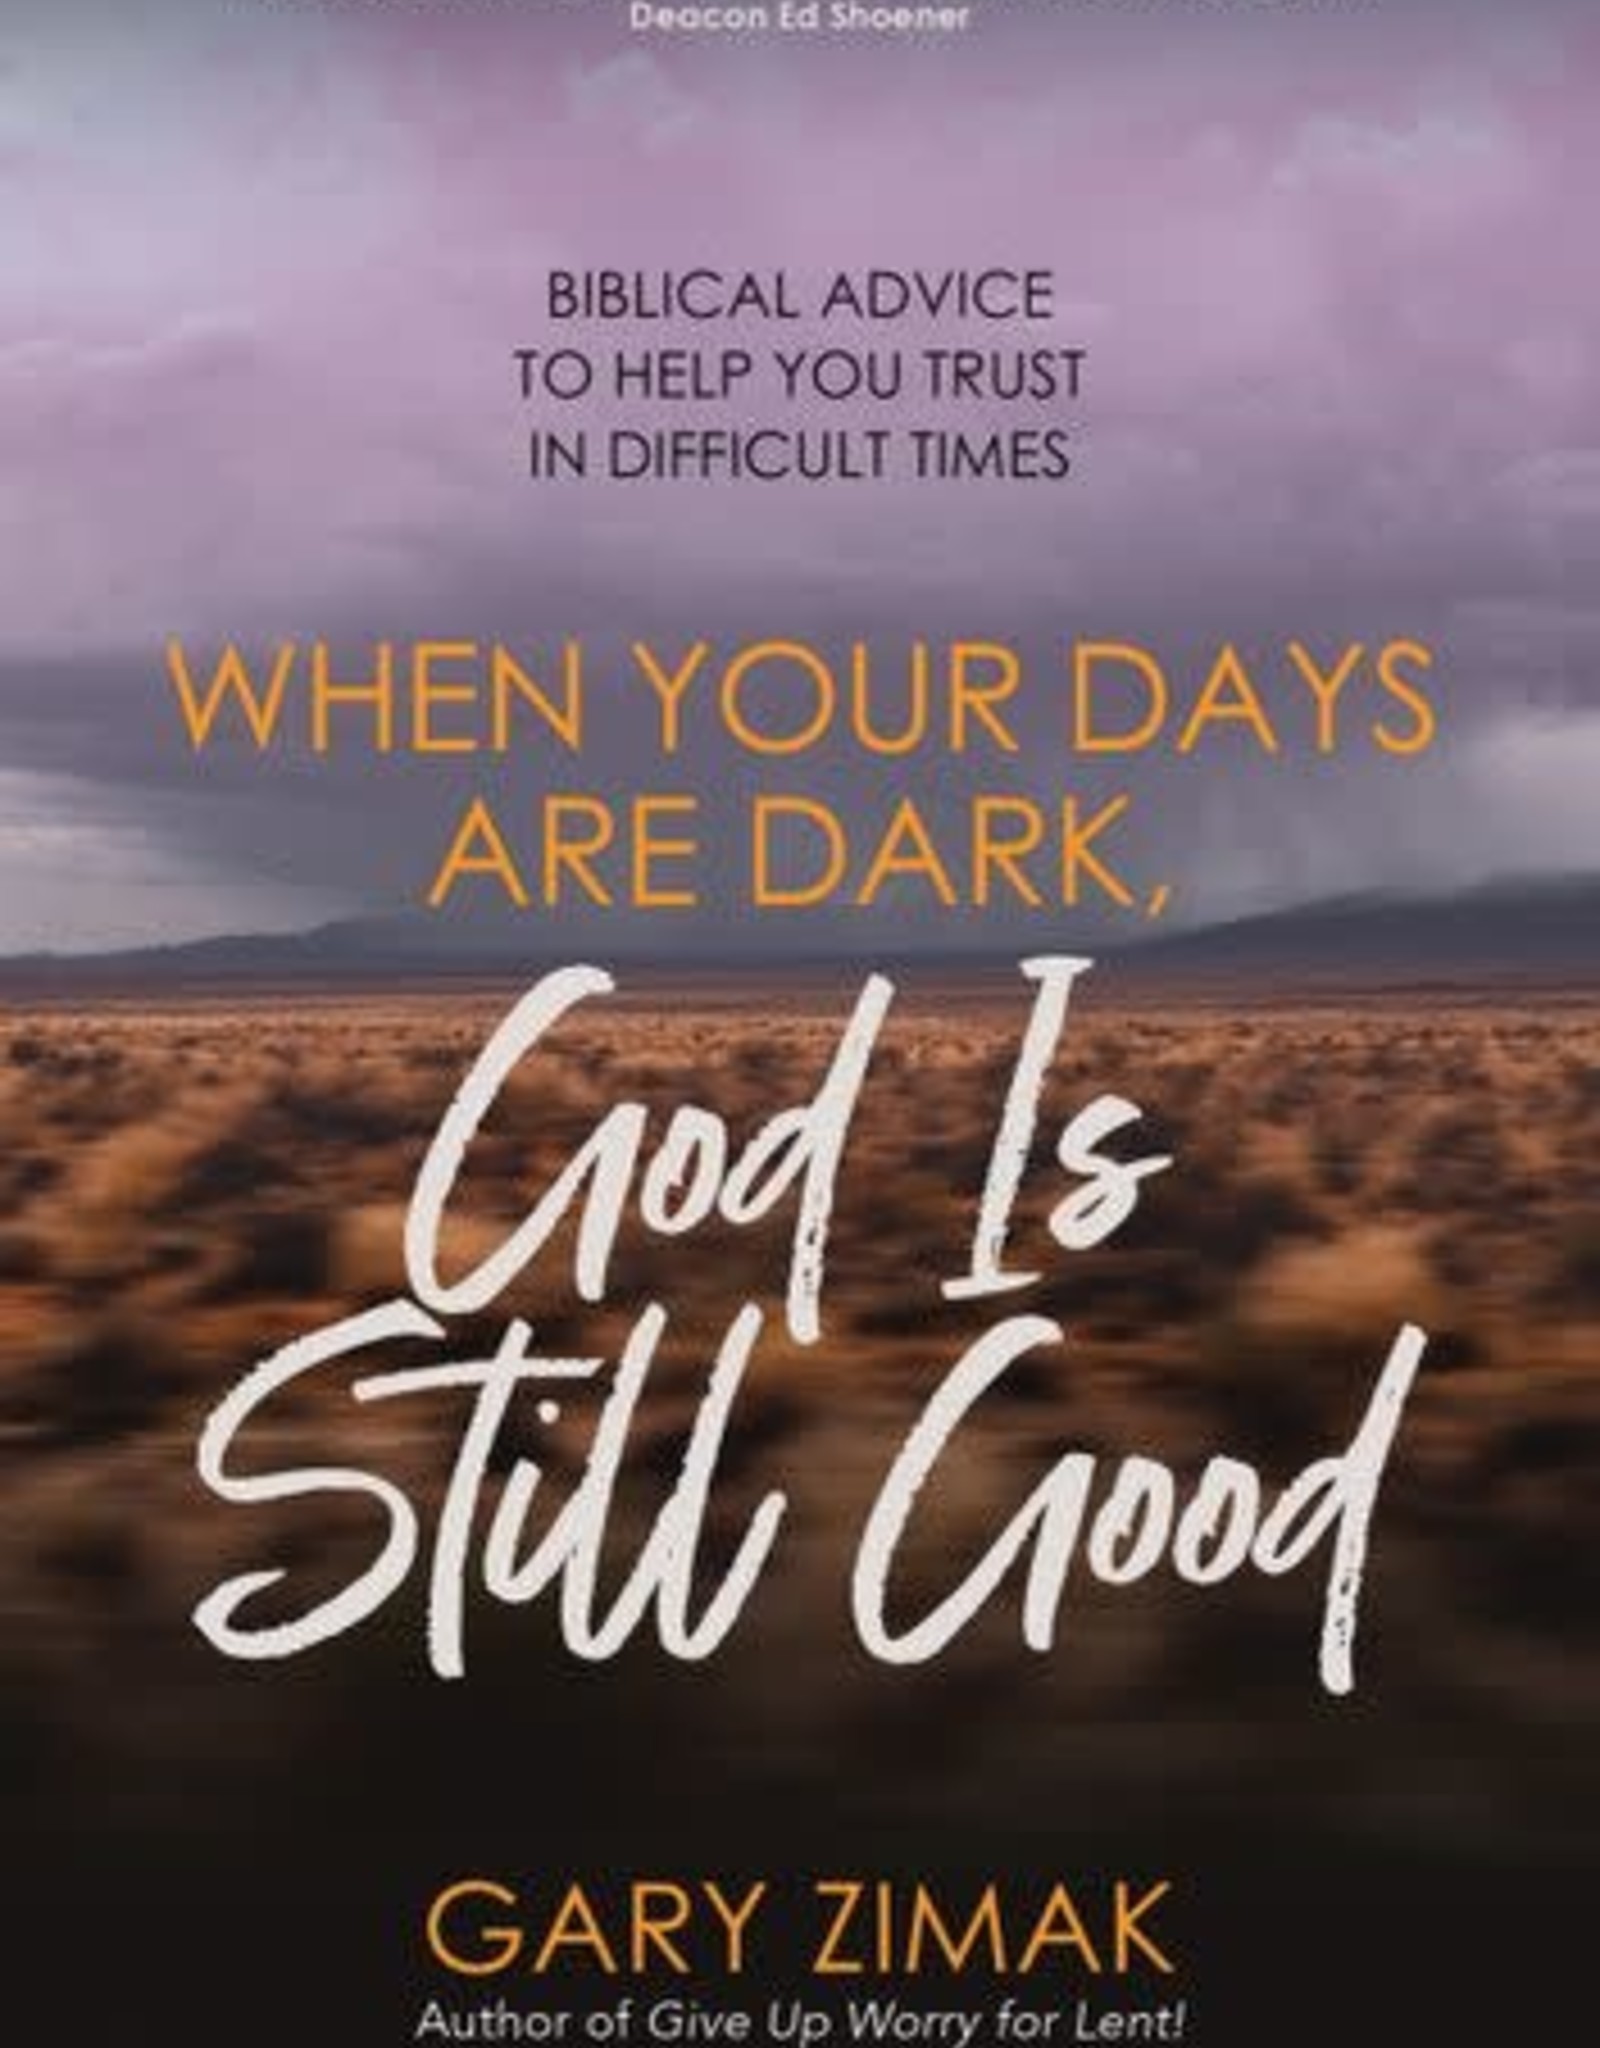 When Your Days Are Dark: God Is Still Good, by Gary Zimak (paperback)